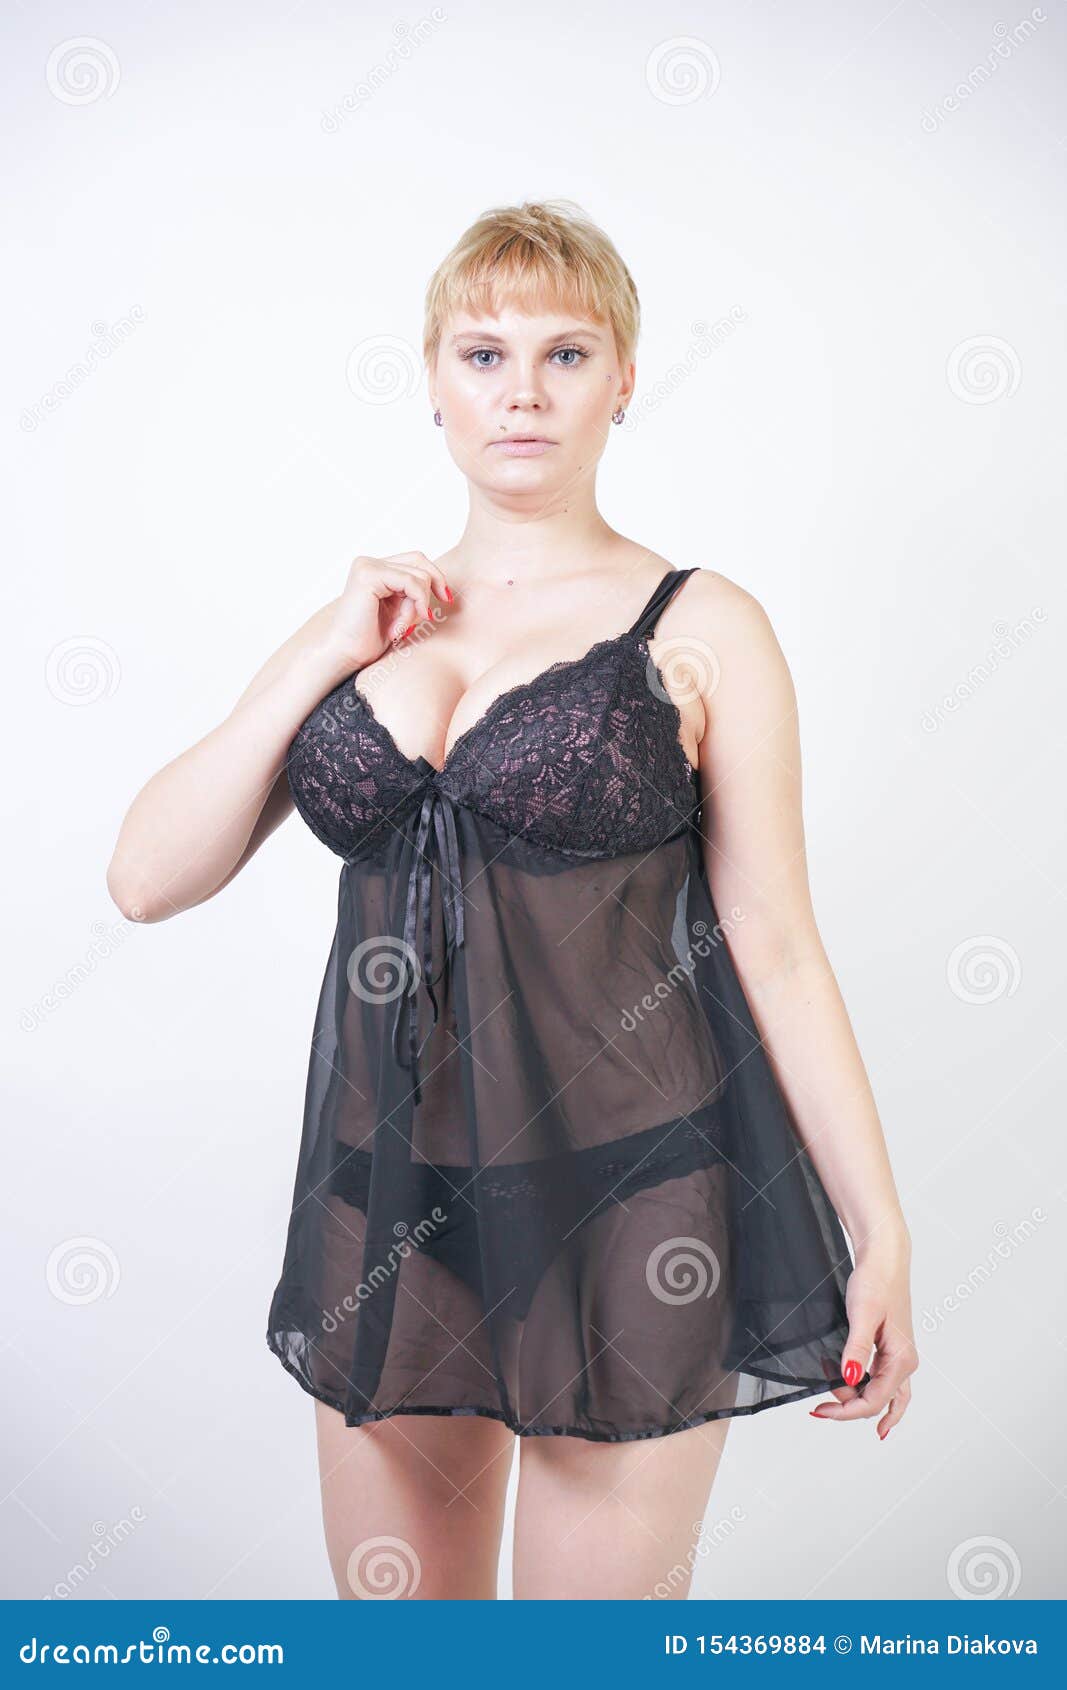 Hot Chubby Woman Wearing Lingerie Transparent Black Dress Stock